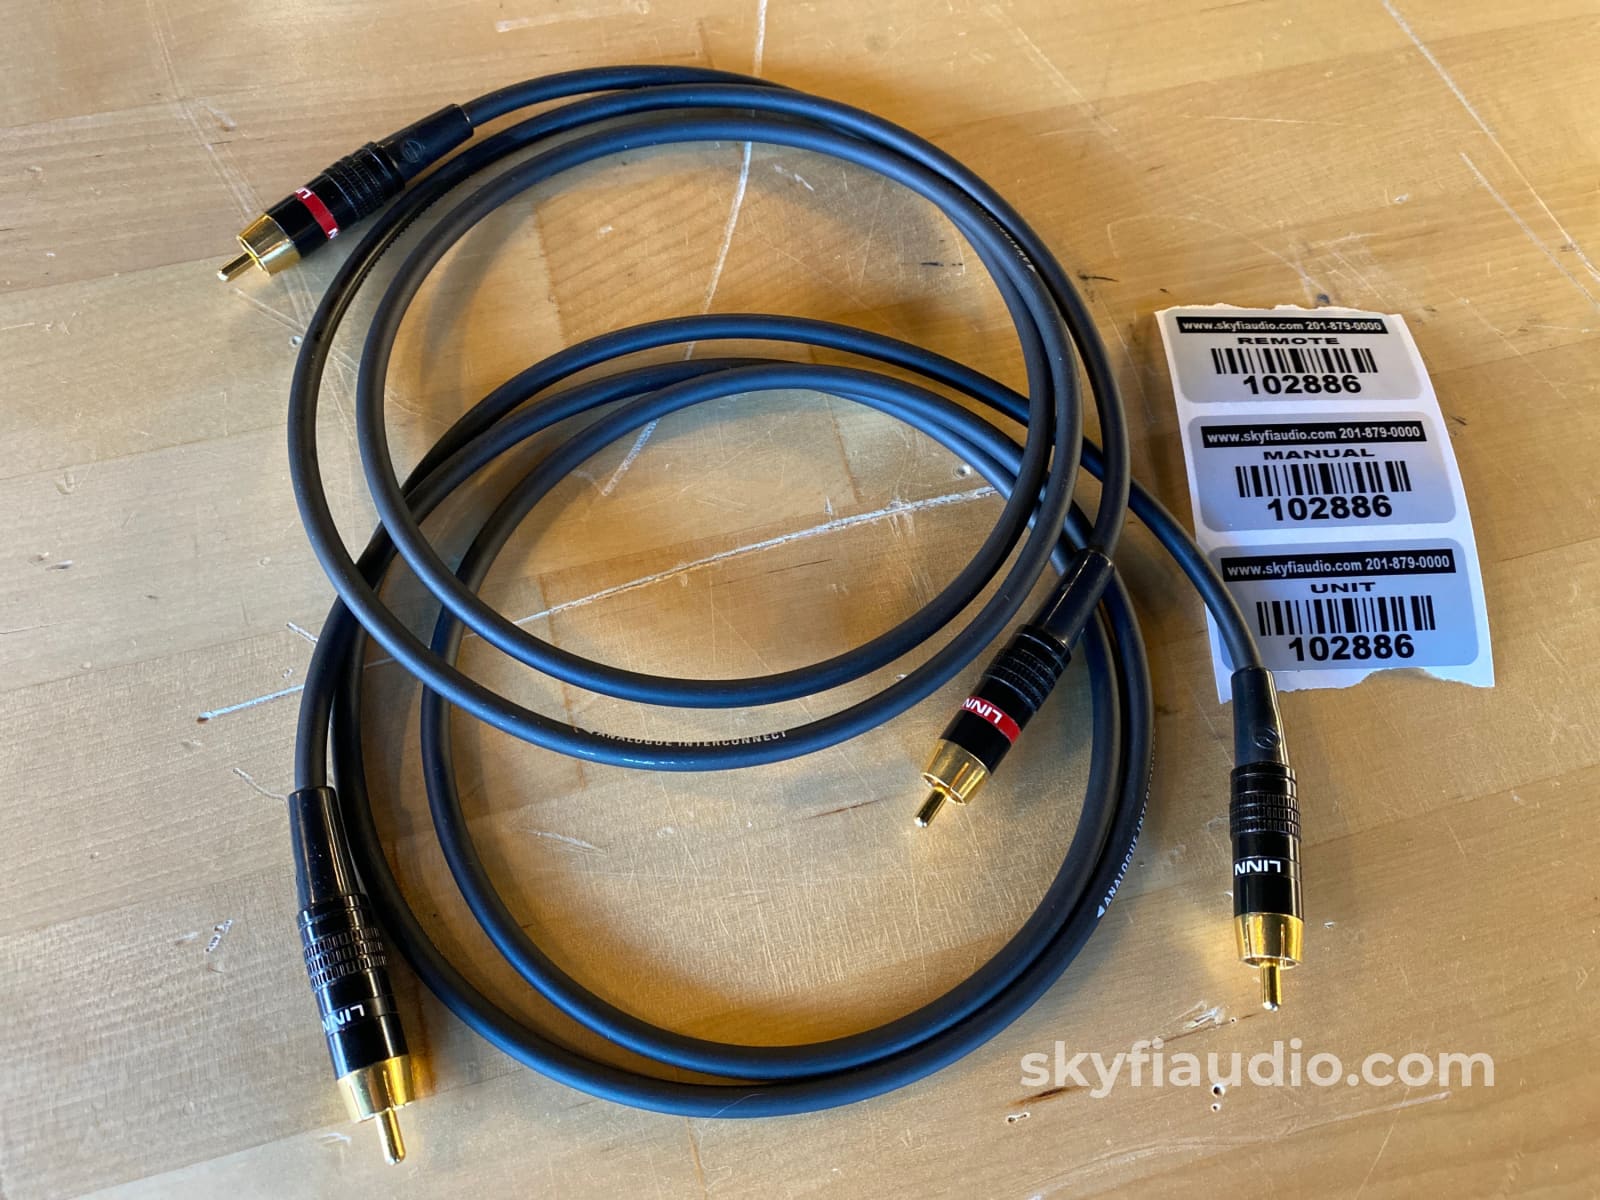 Linn Analog Interconnect - Rca Audio Cables (Pair) 1M